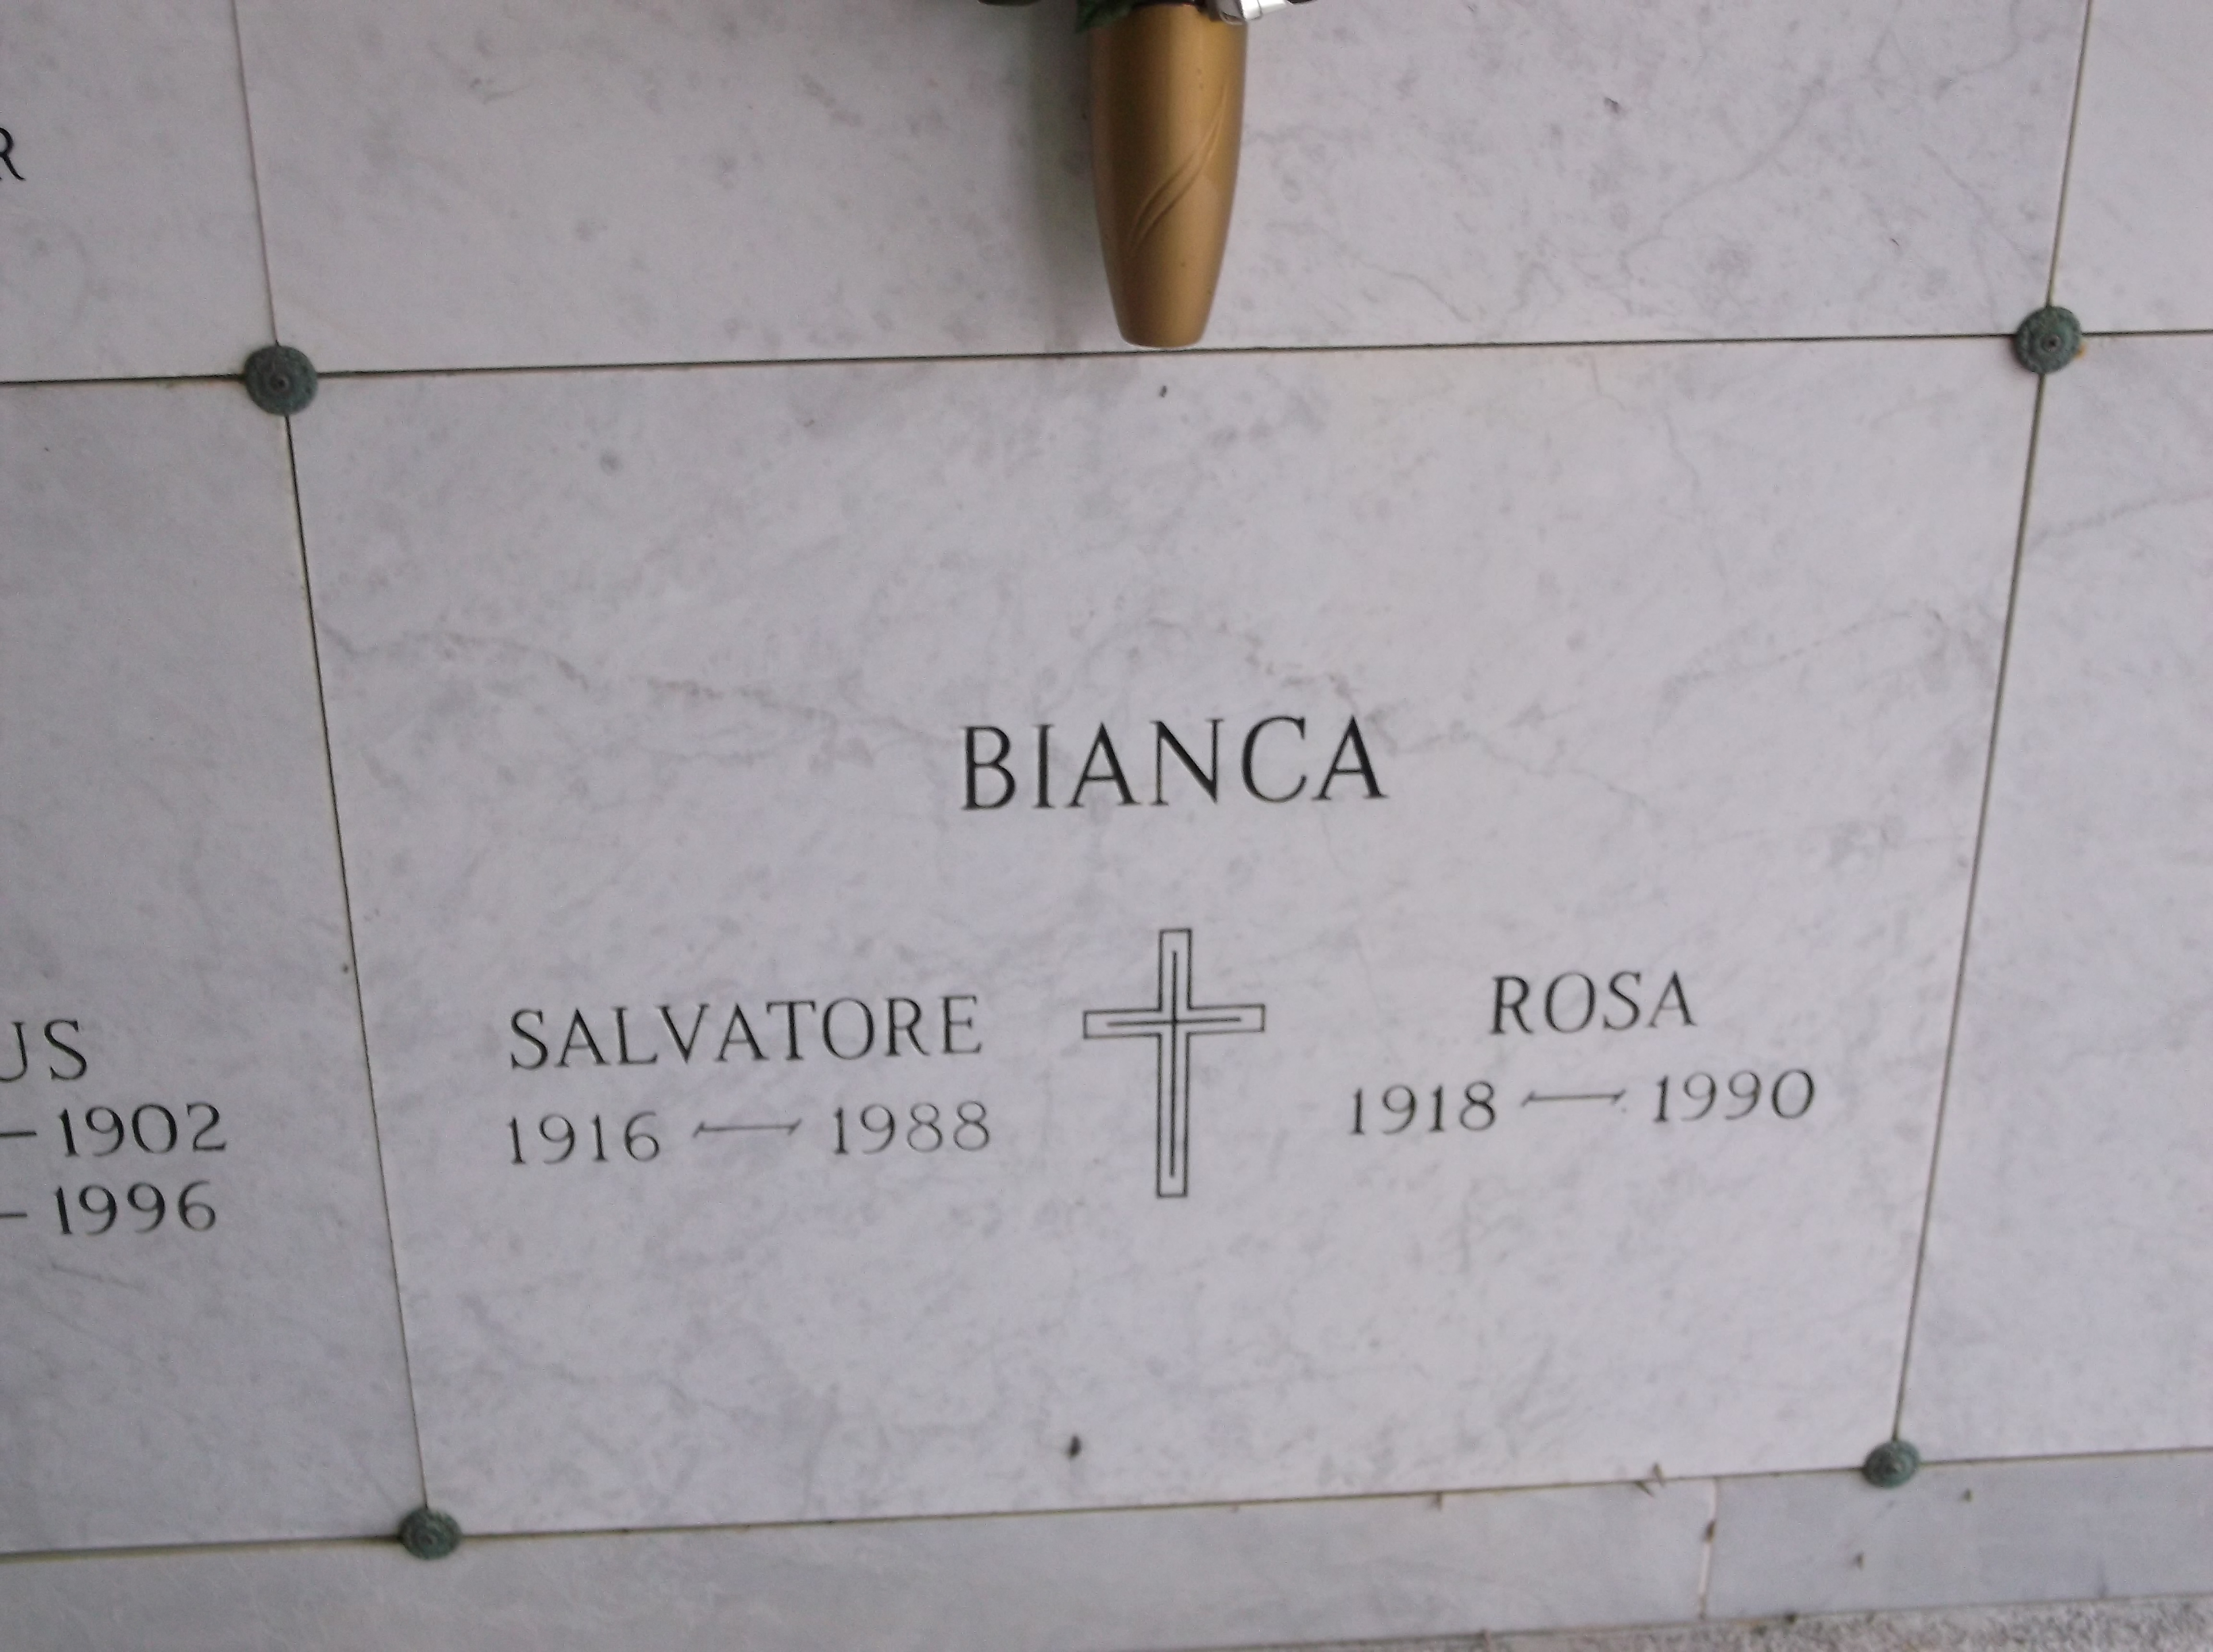 Salvatore Bianca